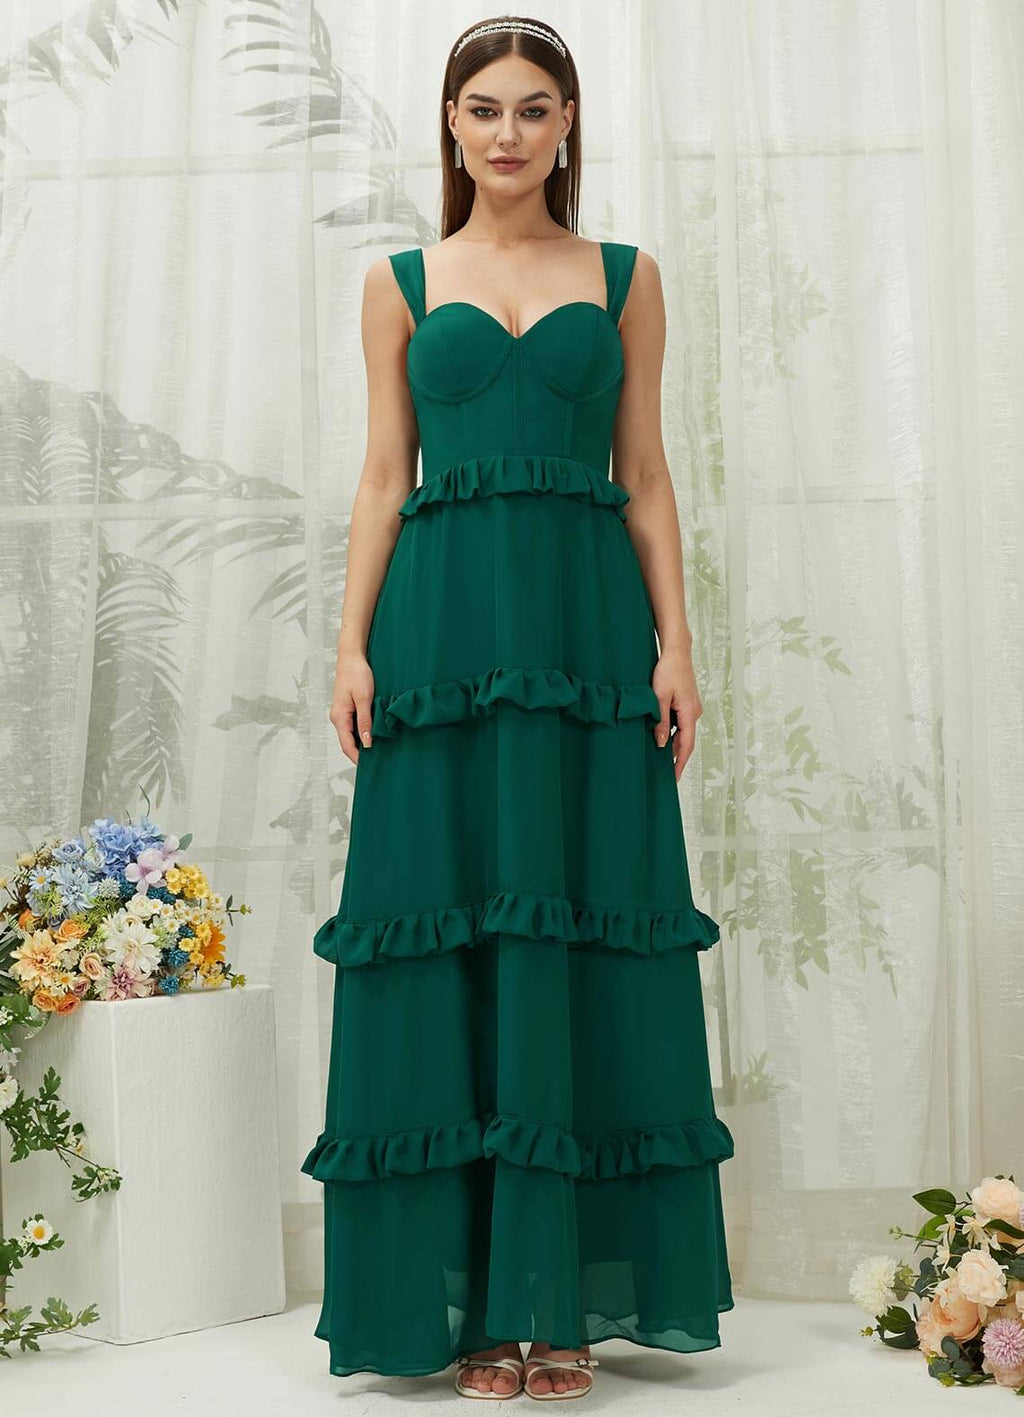 NZ Bridal Emerald Green Chiffon Sweetheart Straps bridesmaid dresses R3701 Sloane a